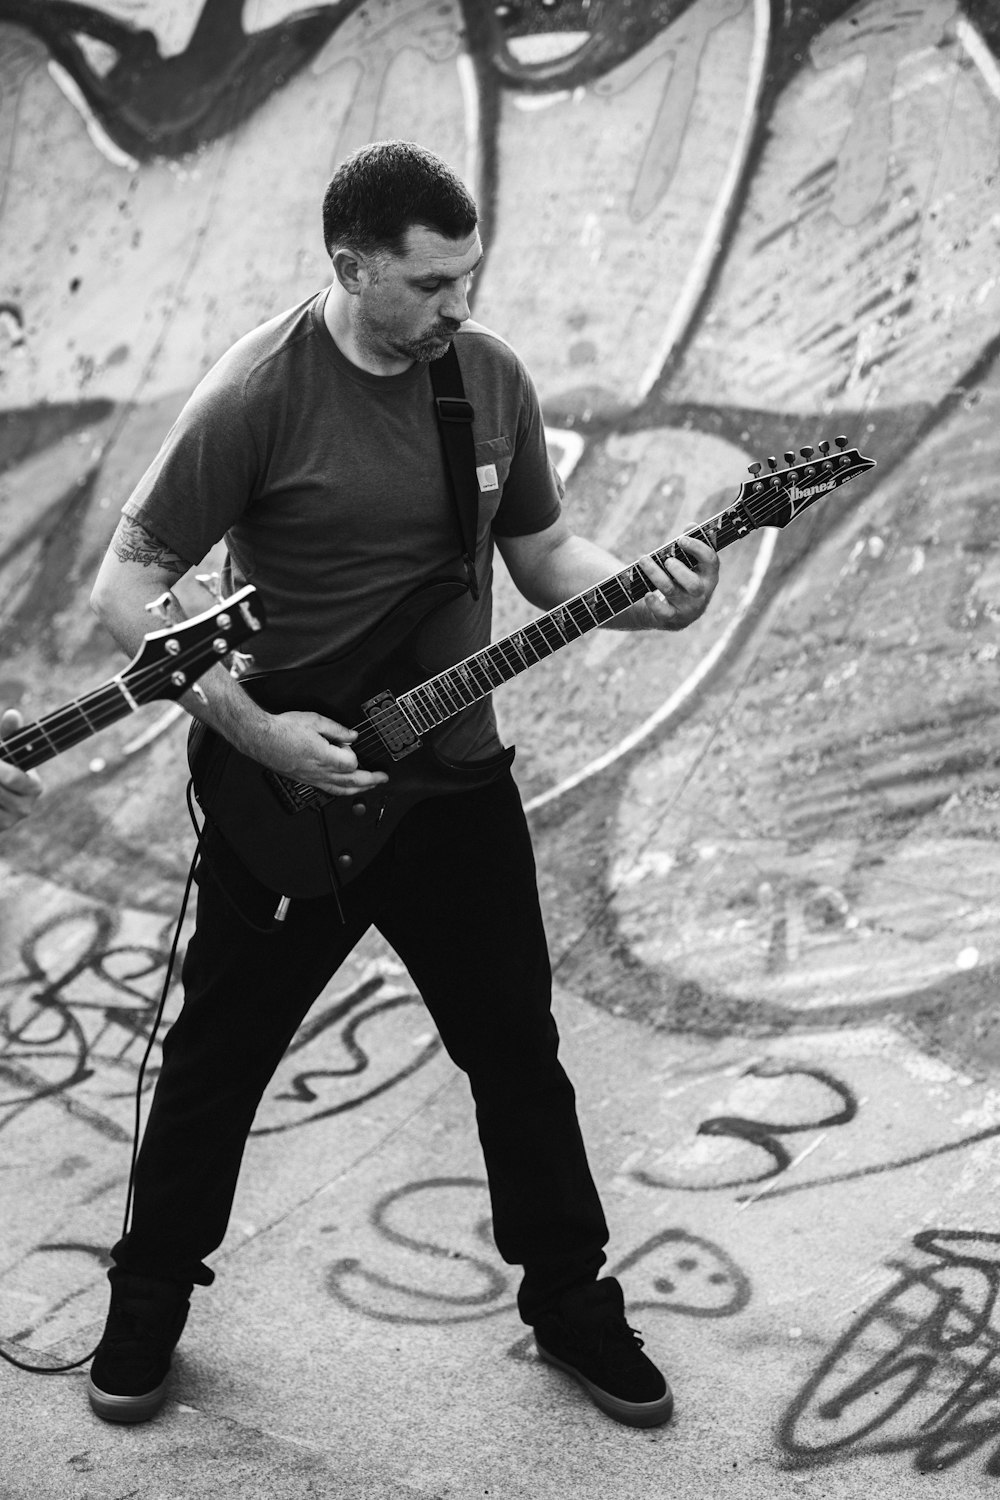 Un hombre tocando una guitarra frente a una pared cubierta de graffiti